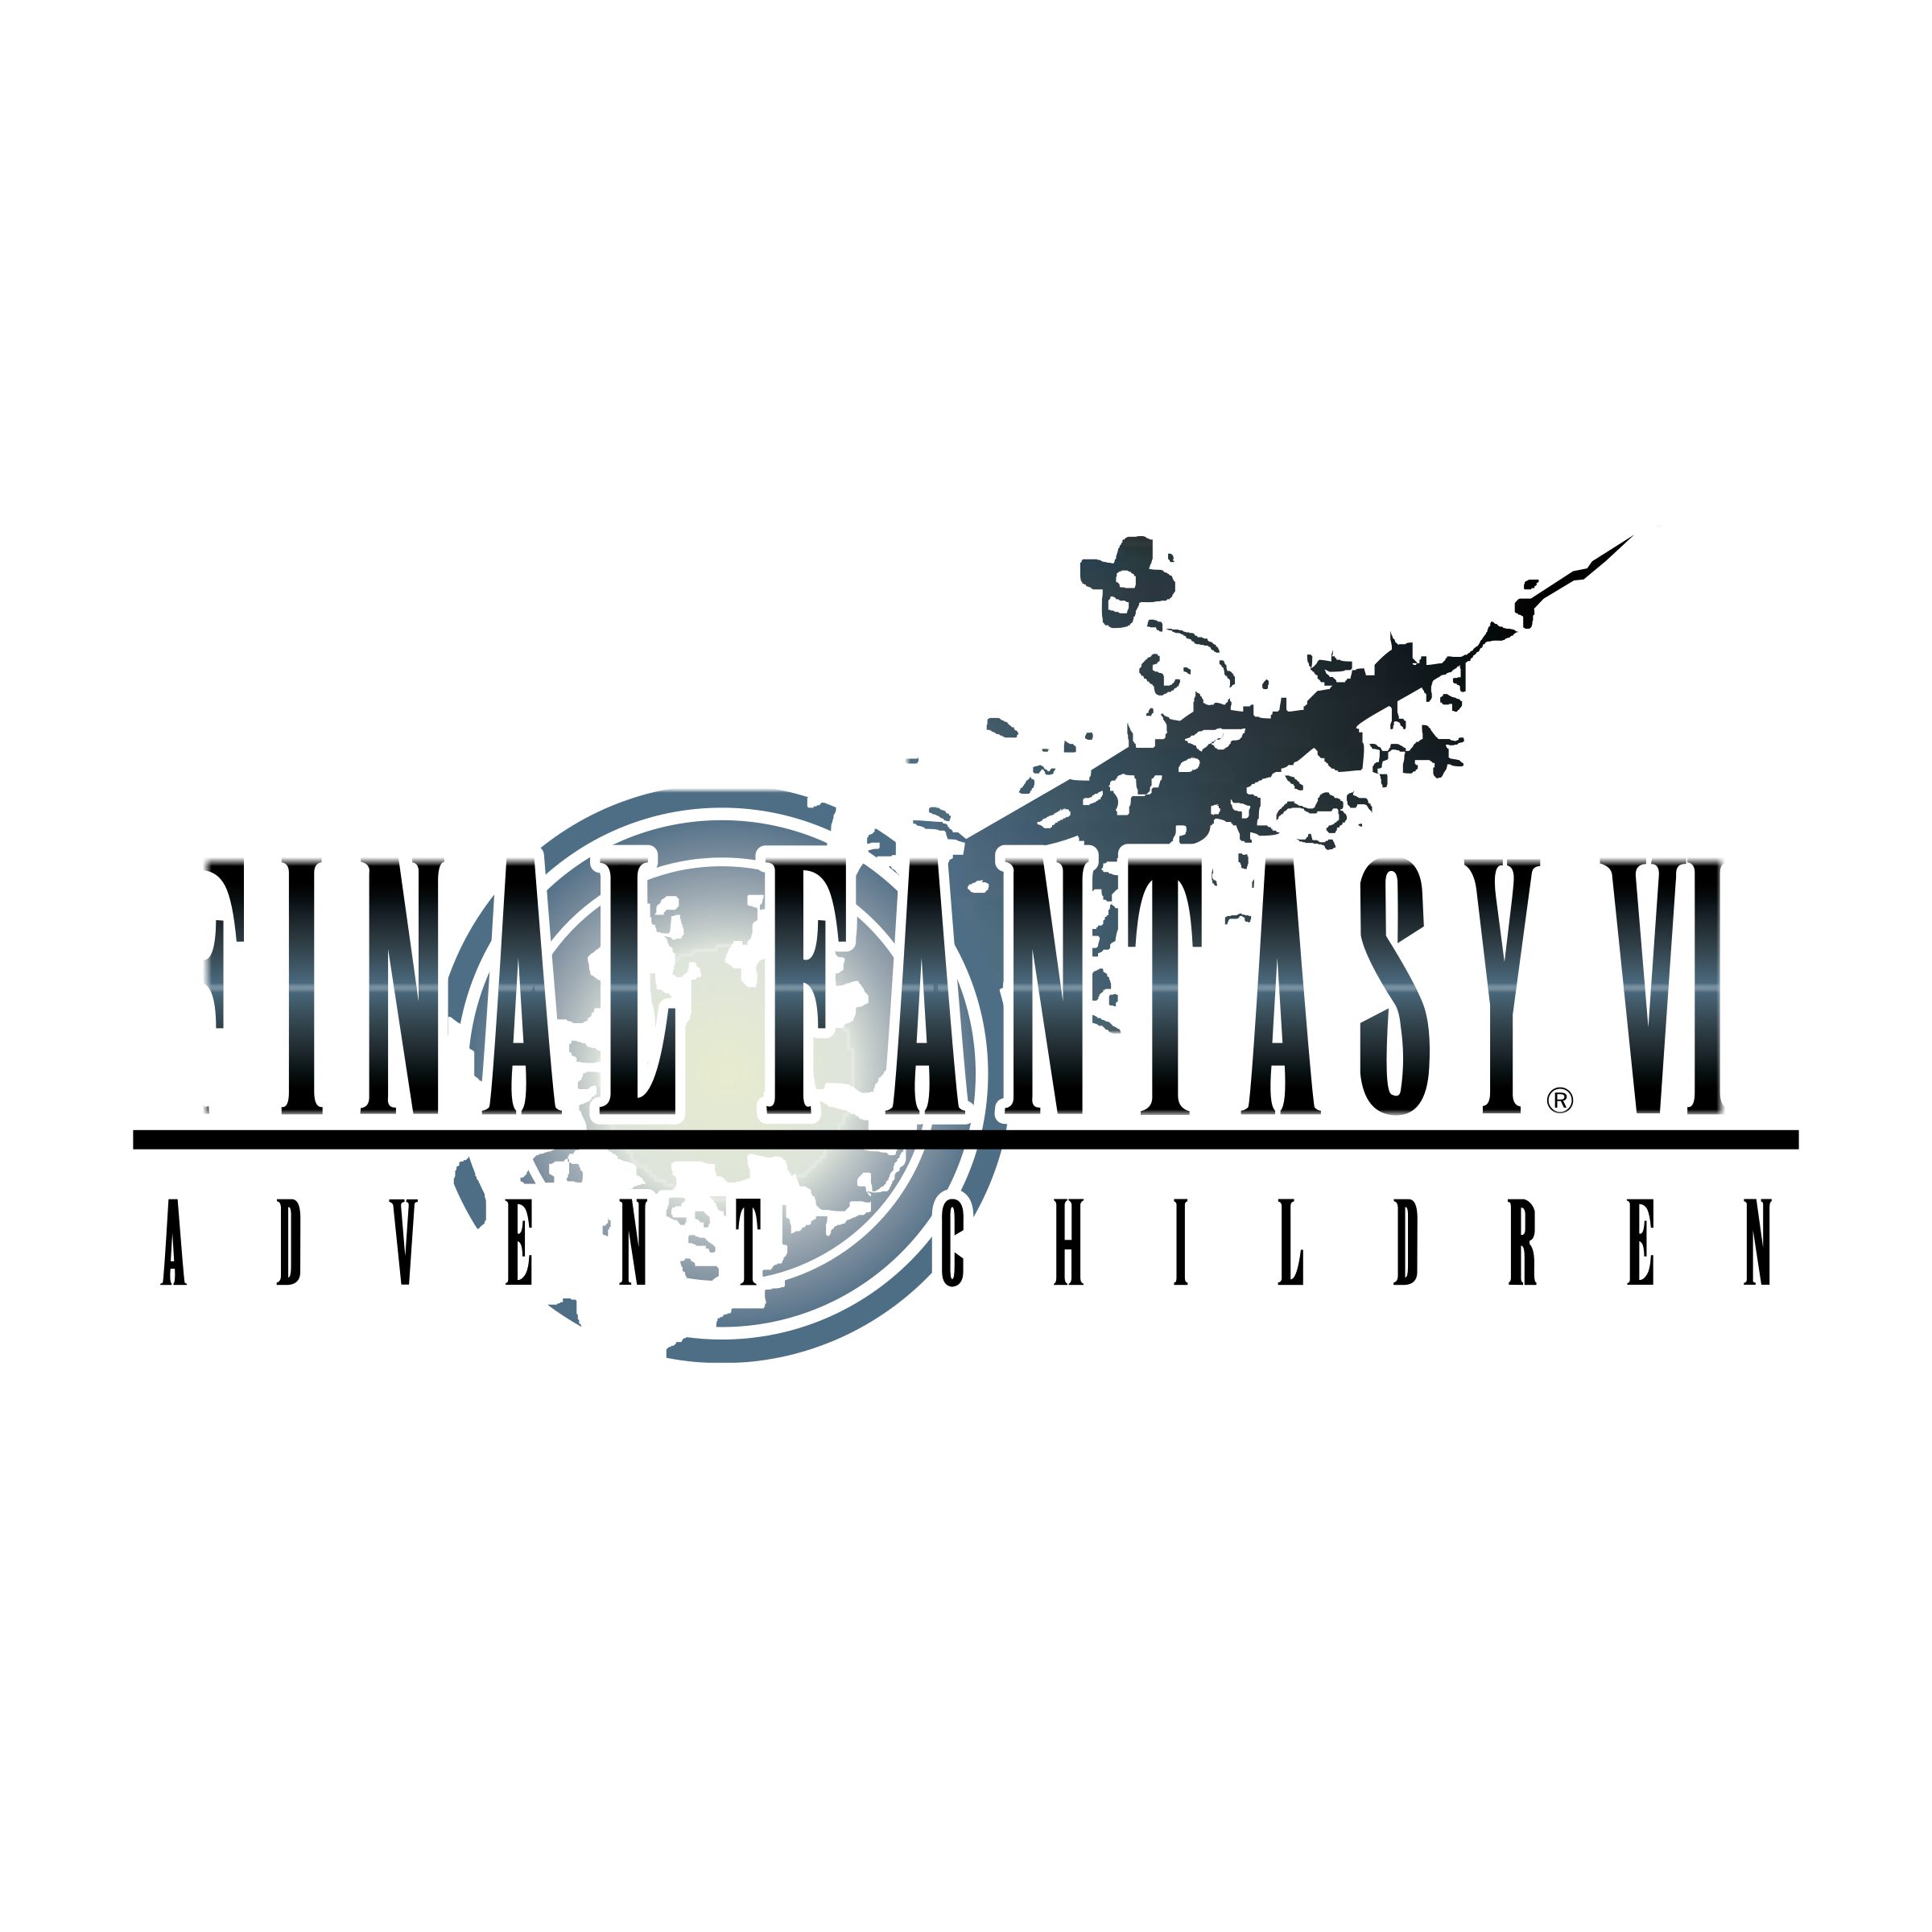 Fantasy Picture Final Logo Free Download Image PNG Image